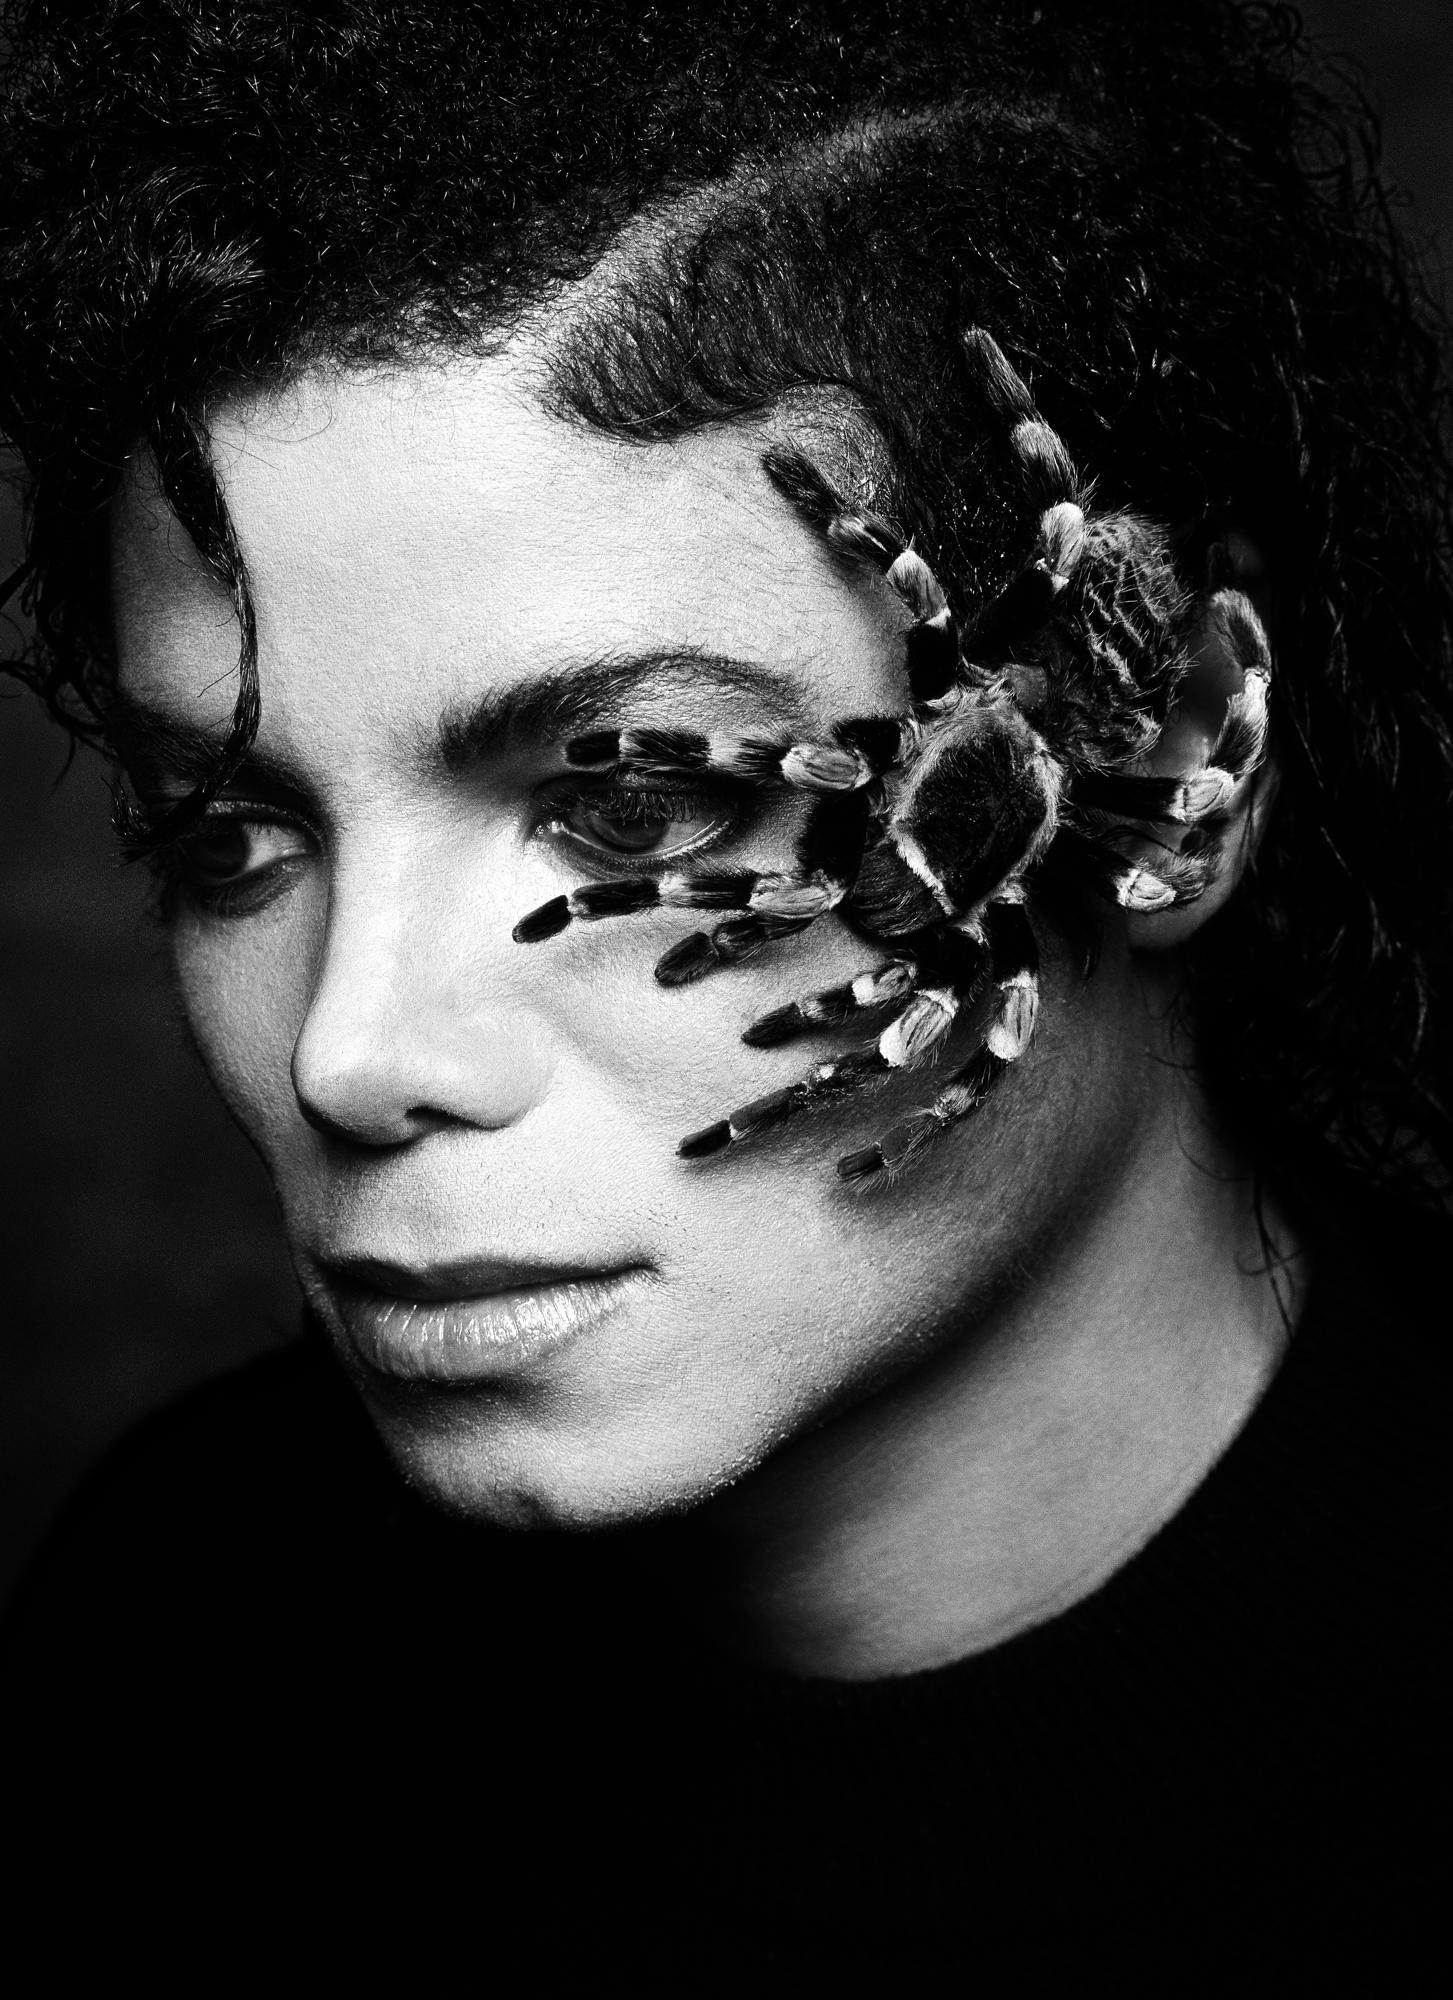 Greg Gorman Portrait Photograph - Michael Jackson, Los Angeles, 21st Century, Contemporary, Celebrity, Photography